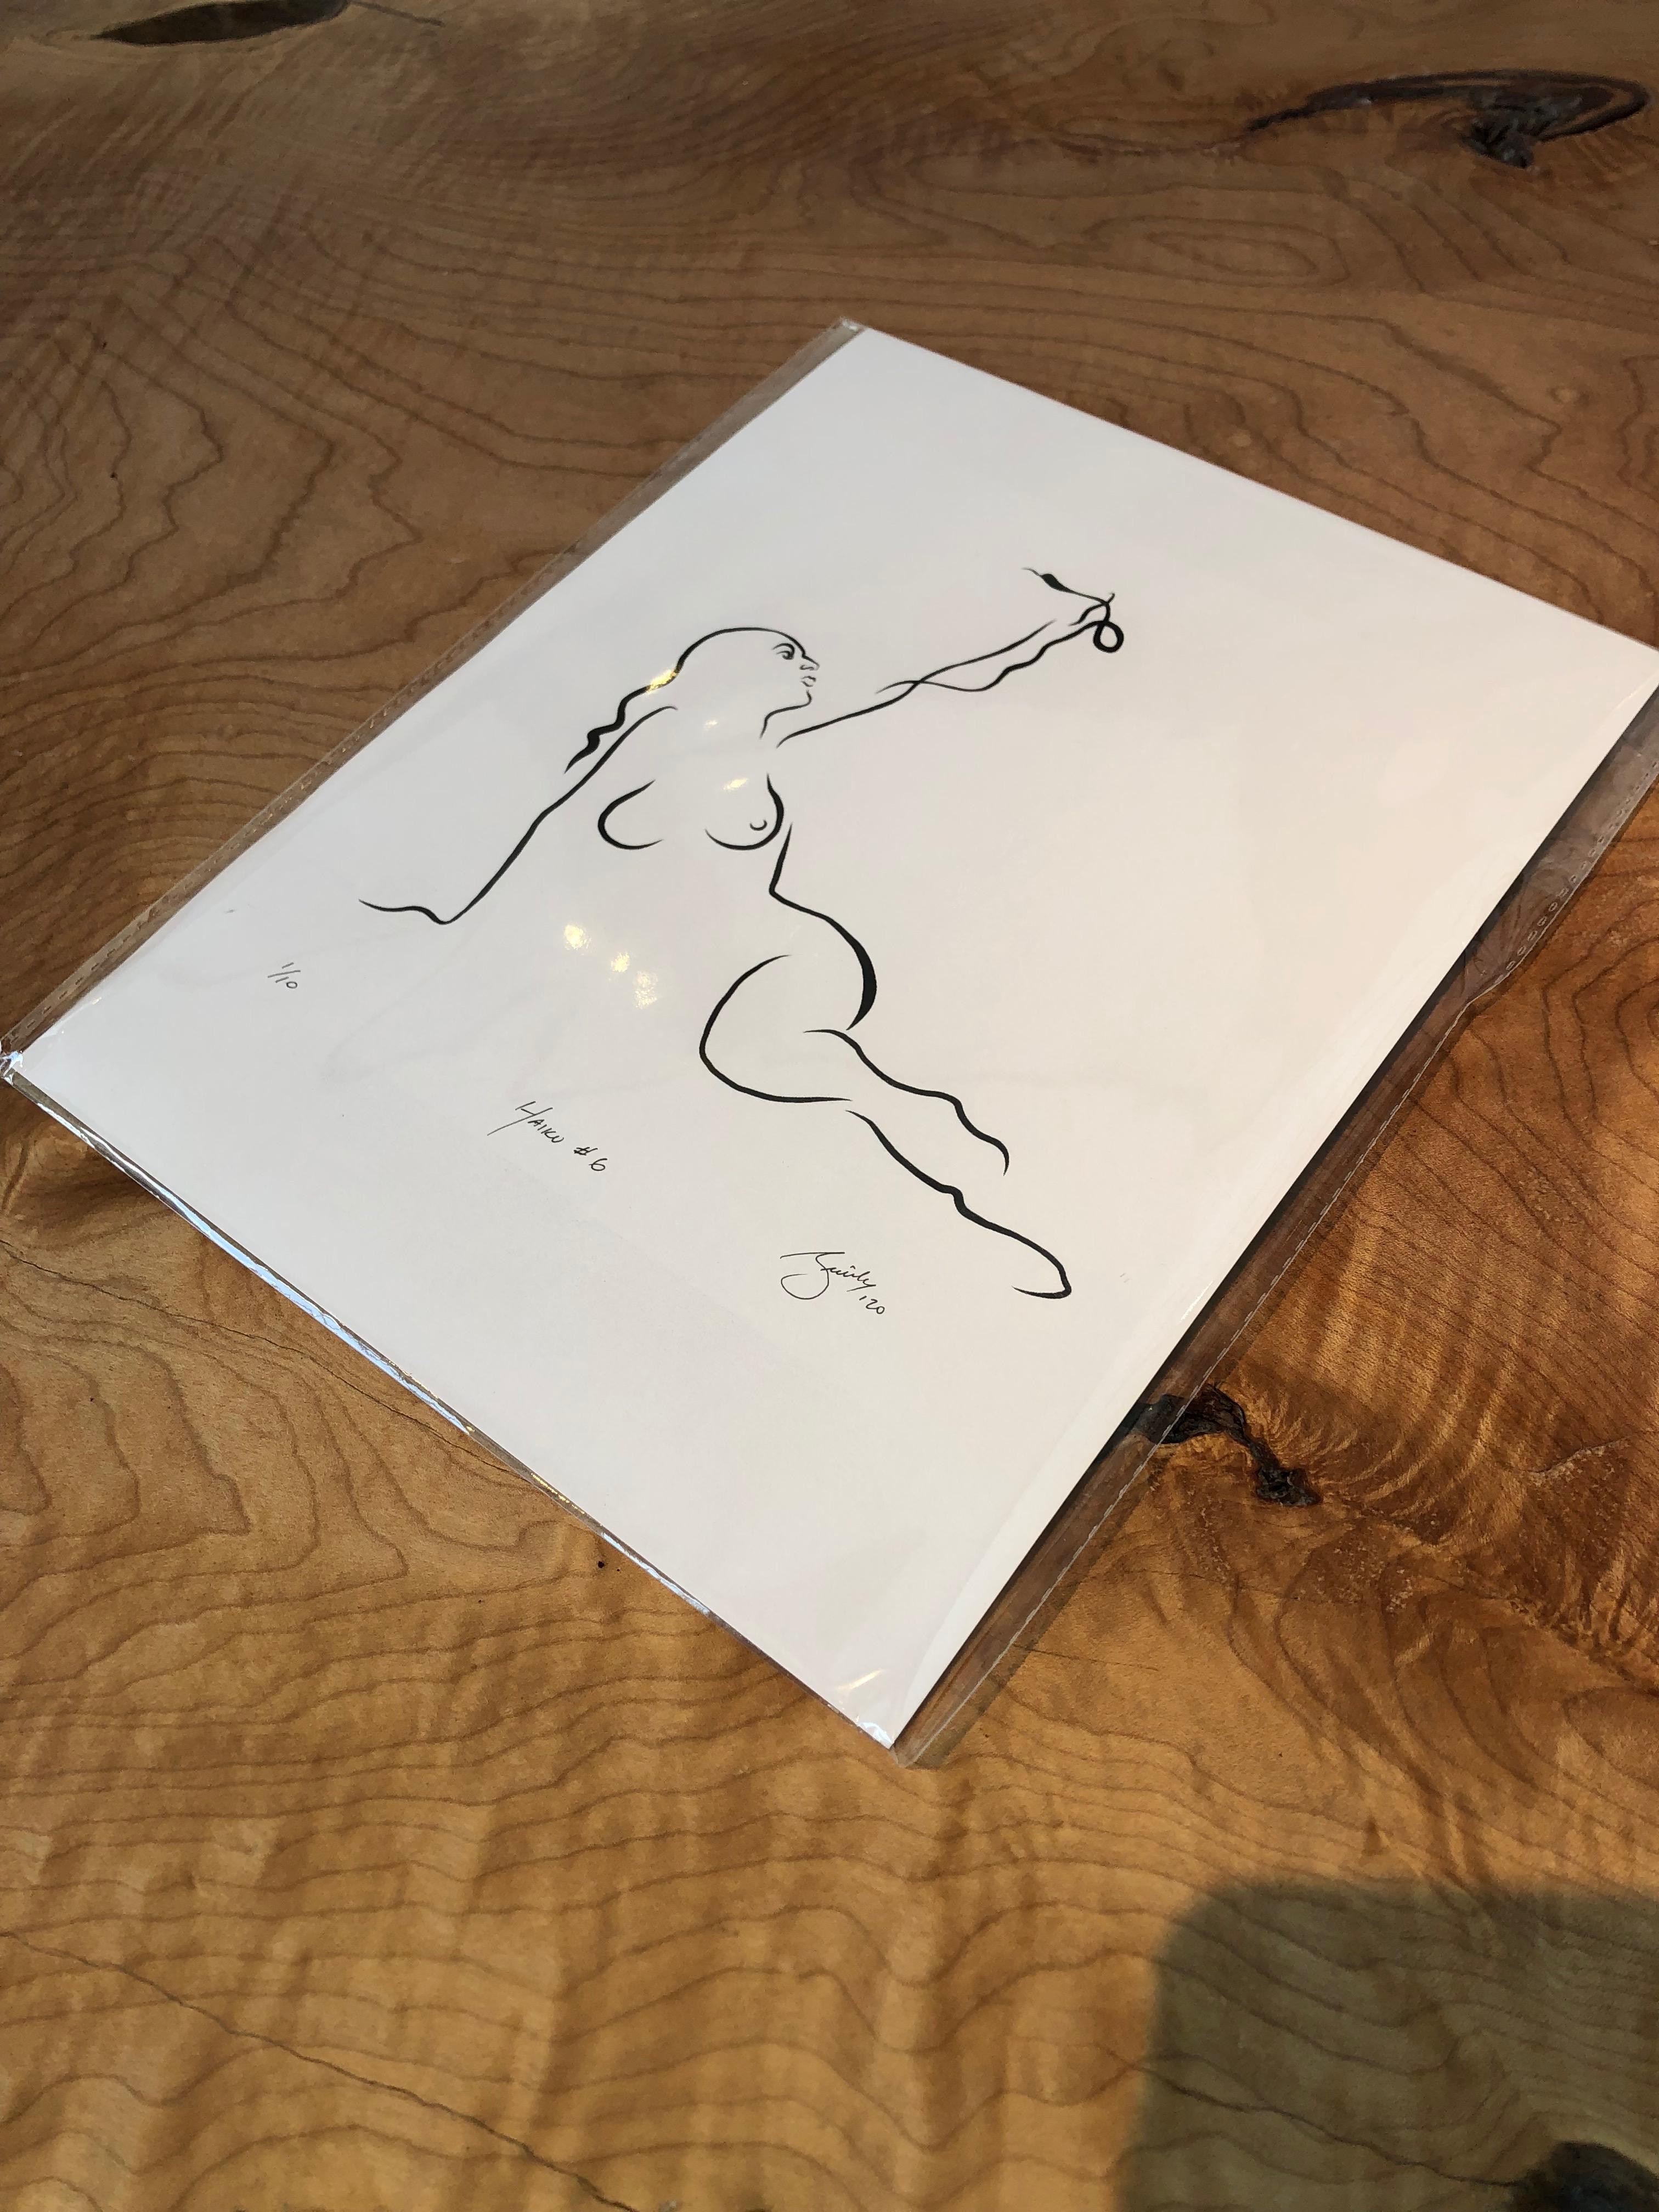 Haiku #6, 1/50 - Digital Vector B&W Drawing Female Nude Woman Figure with Snake - Print by Michael Binkley